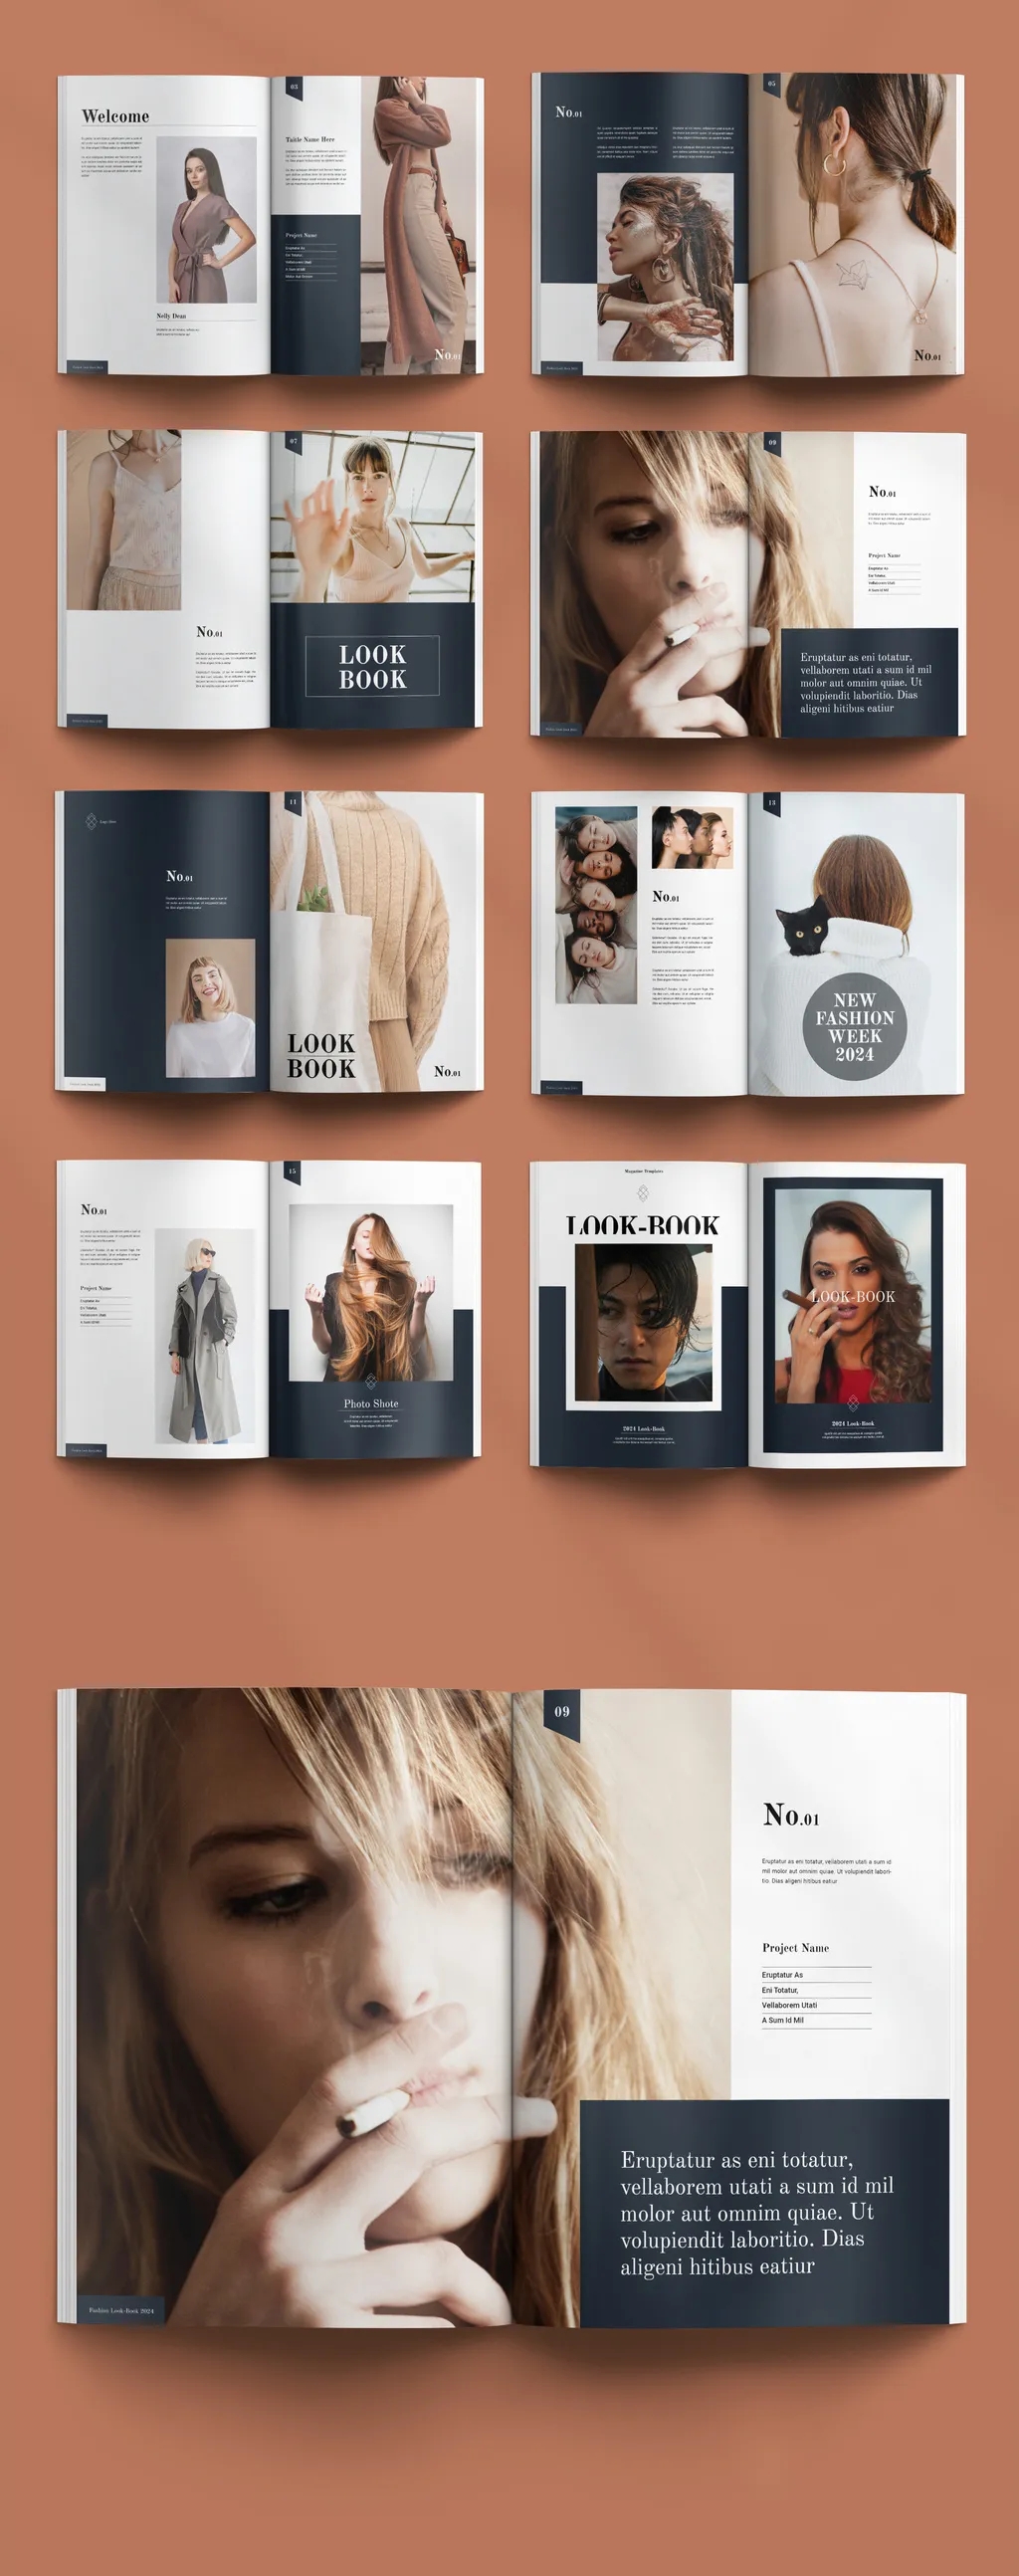 Adobestock - Fashion Look Book 717501092